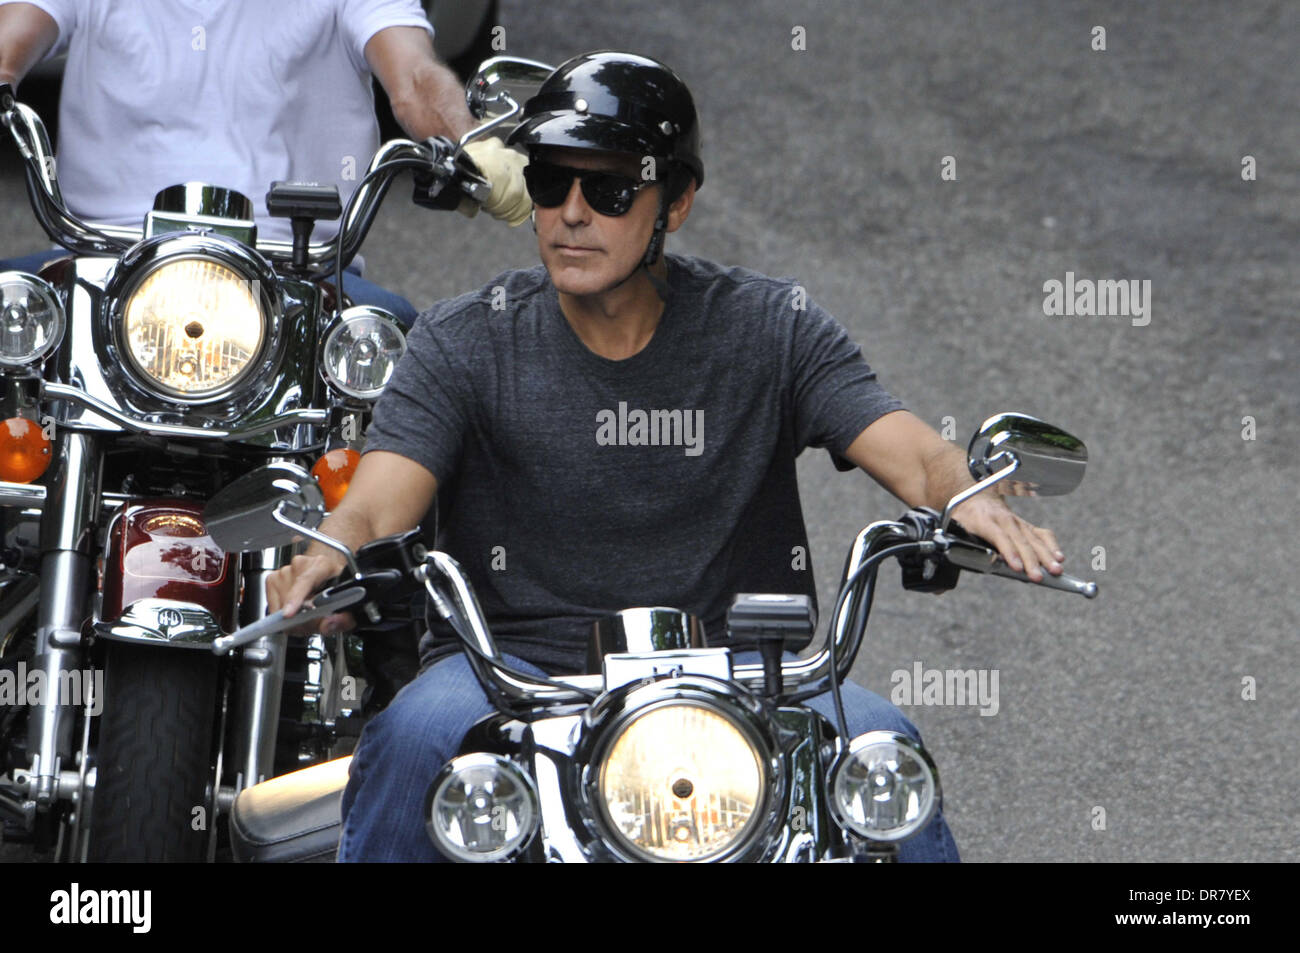 George Clooney riding a Harley Davidson motorcycle in Milan Milan, Italy -  19.06.12 Stock Photo - Alamy